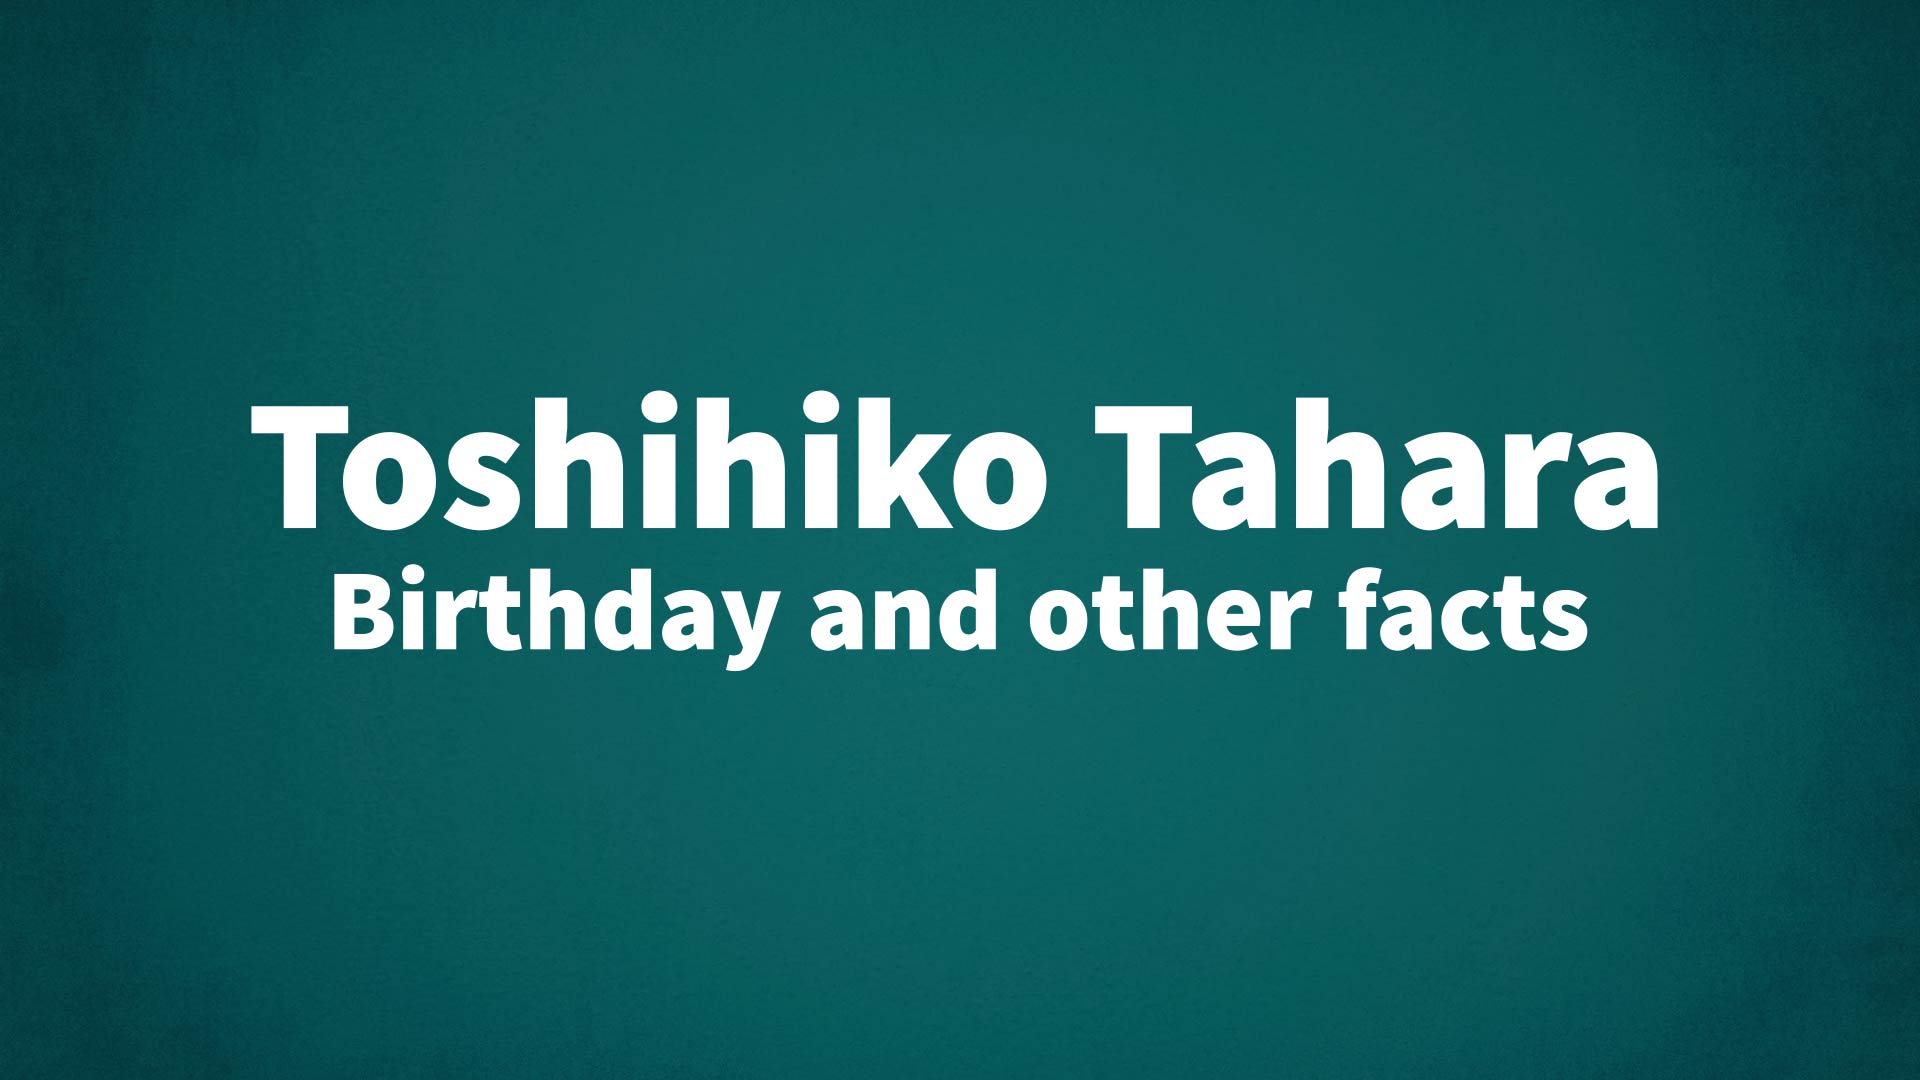 title image for Toshihiko Tahara birthday